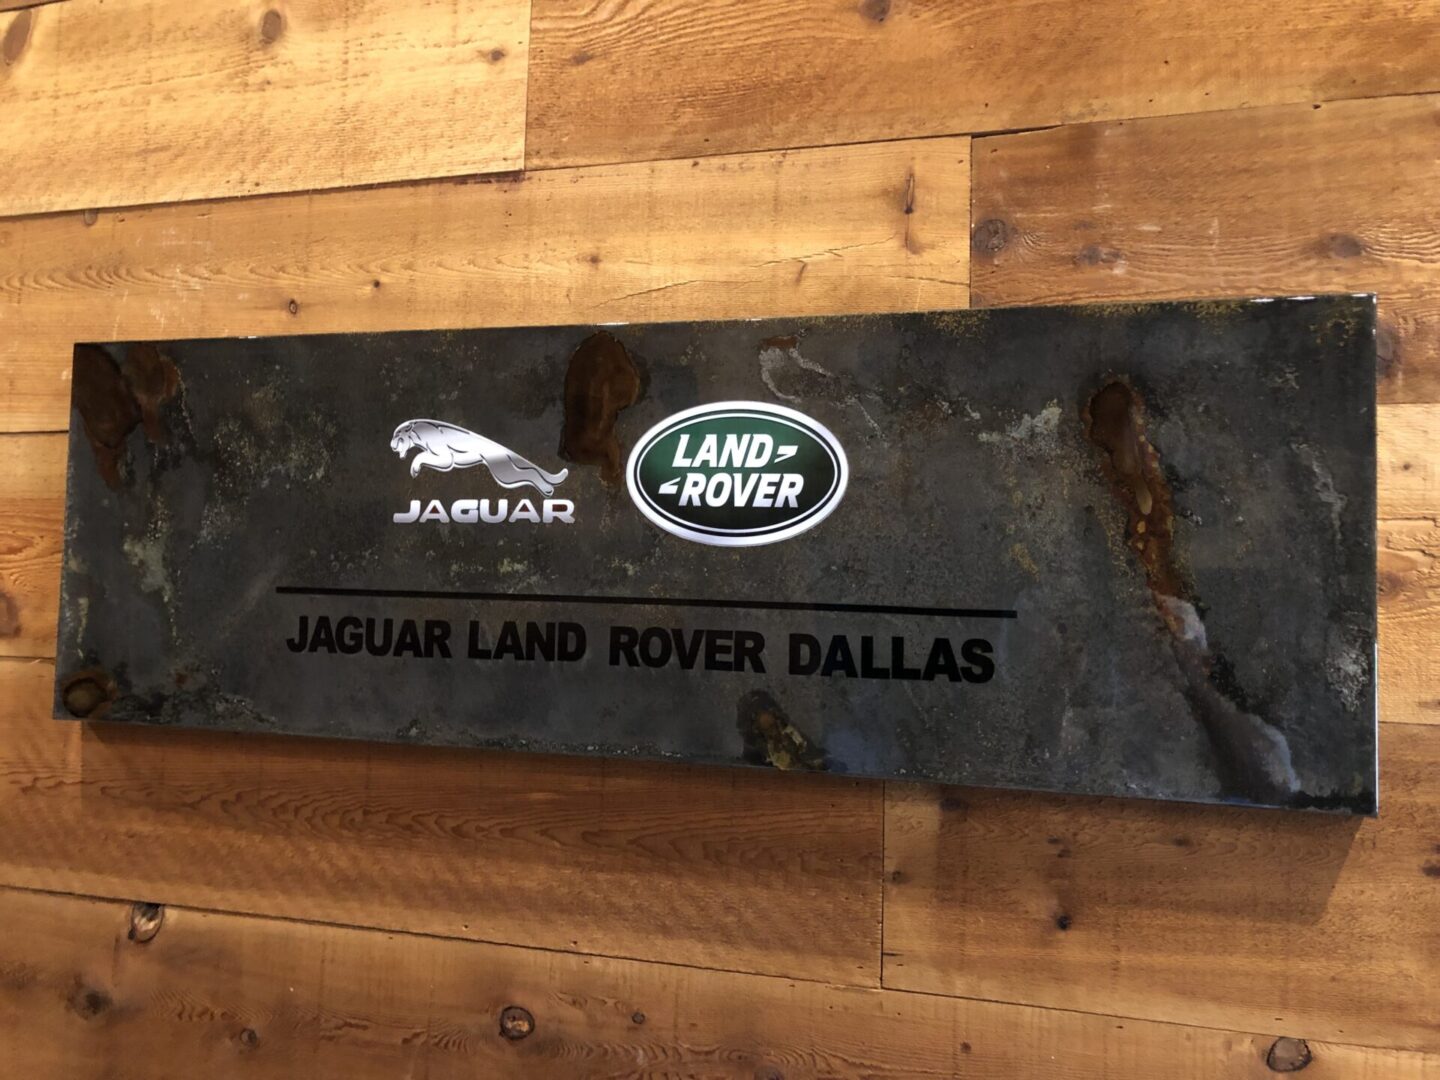 Jaguar Land Rover Dallas Wall Art on display